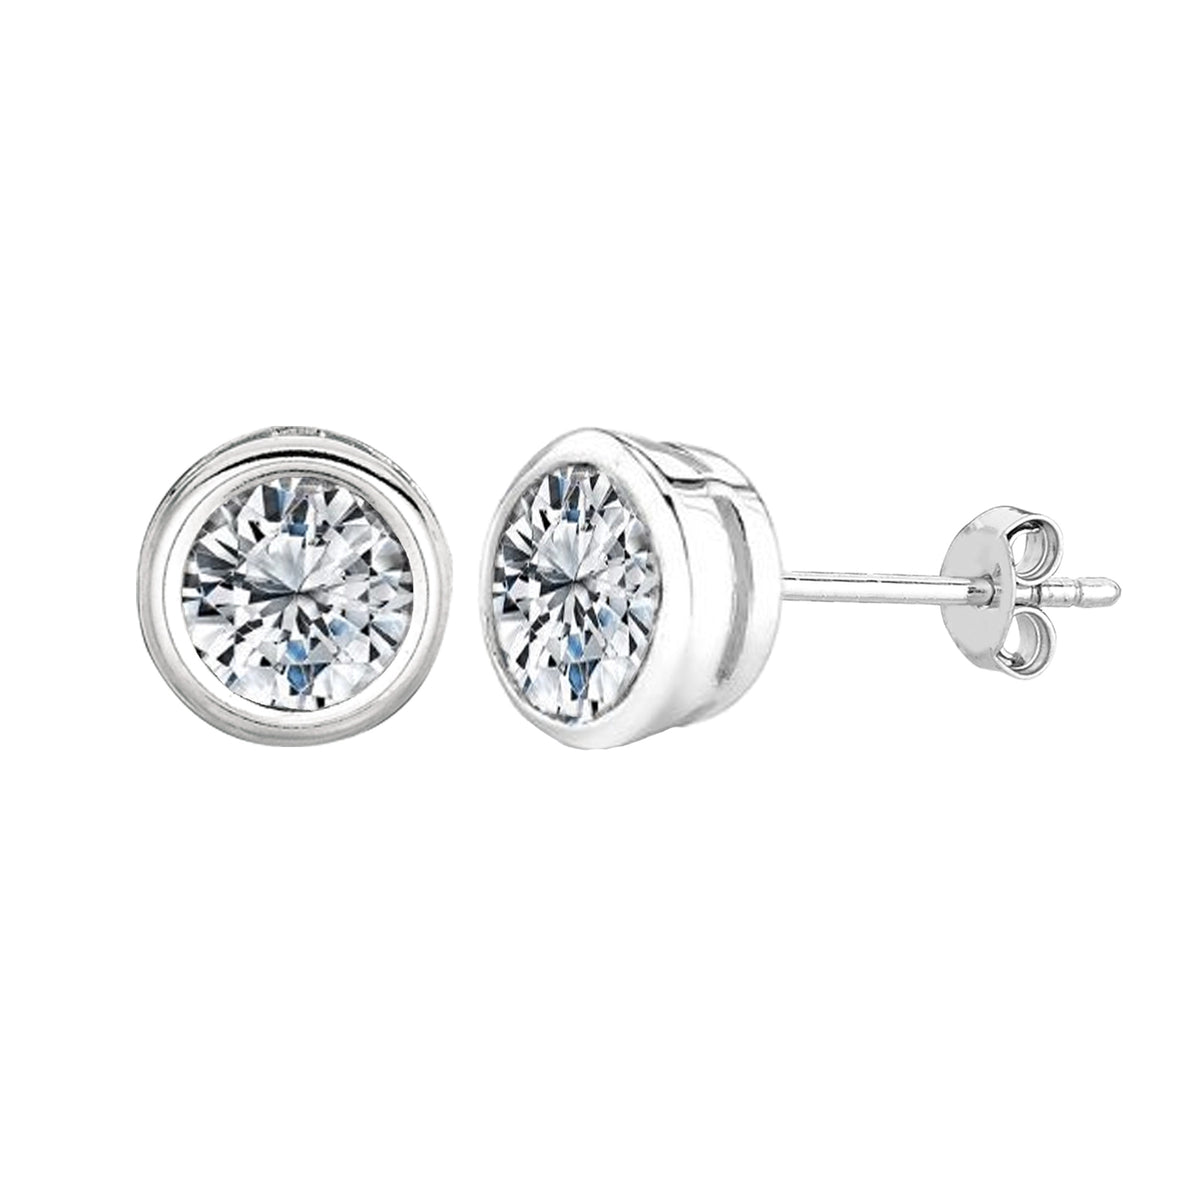 Sterling Silver Rhodium Finish Round Bezel Set Cubic Zirconia Stud Earring fine designer jewelry for men and women